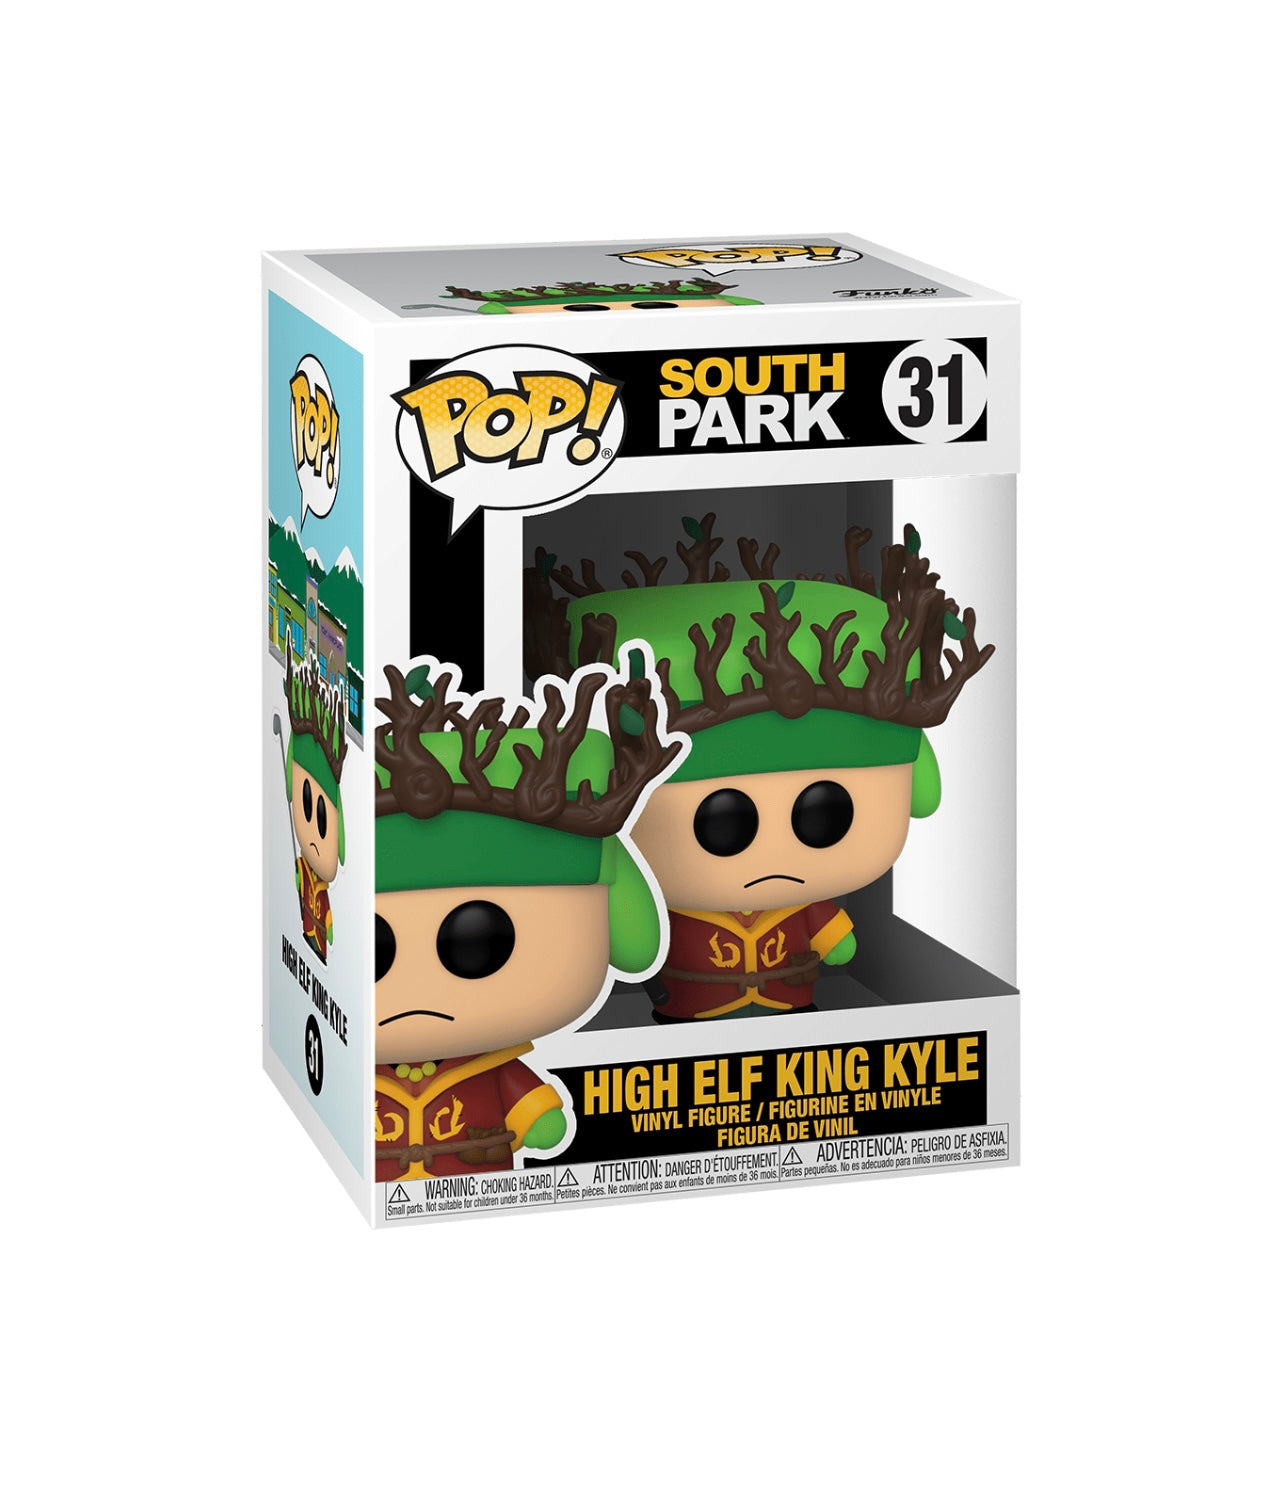 POP! TV South Park High Elf King Kyle #31